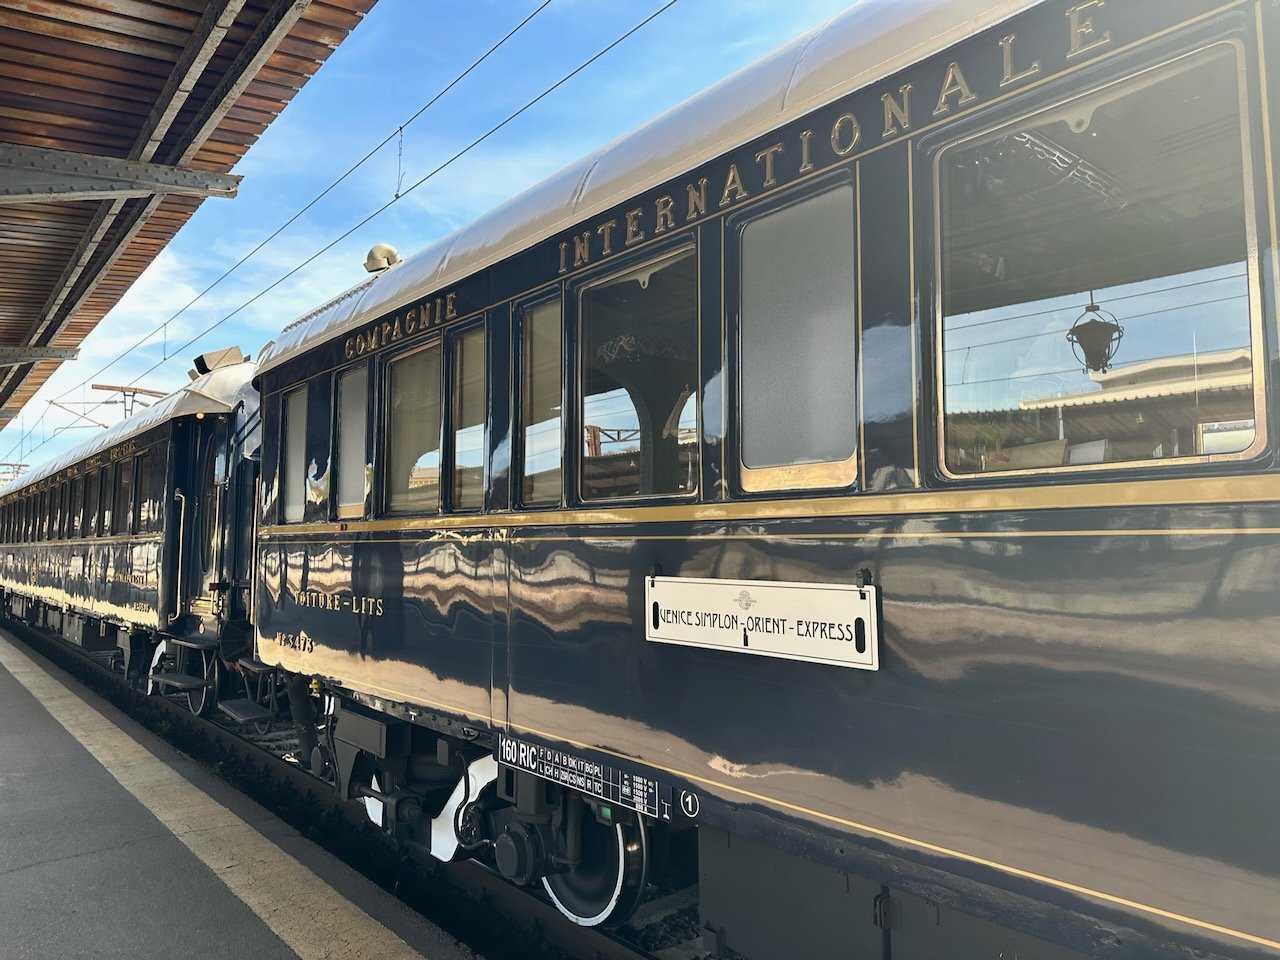 Venice Simplon-Orient-Express, A Belmond Train